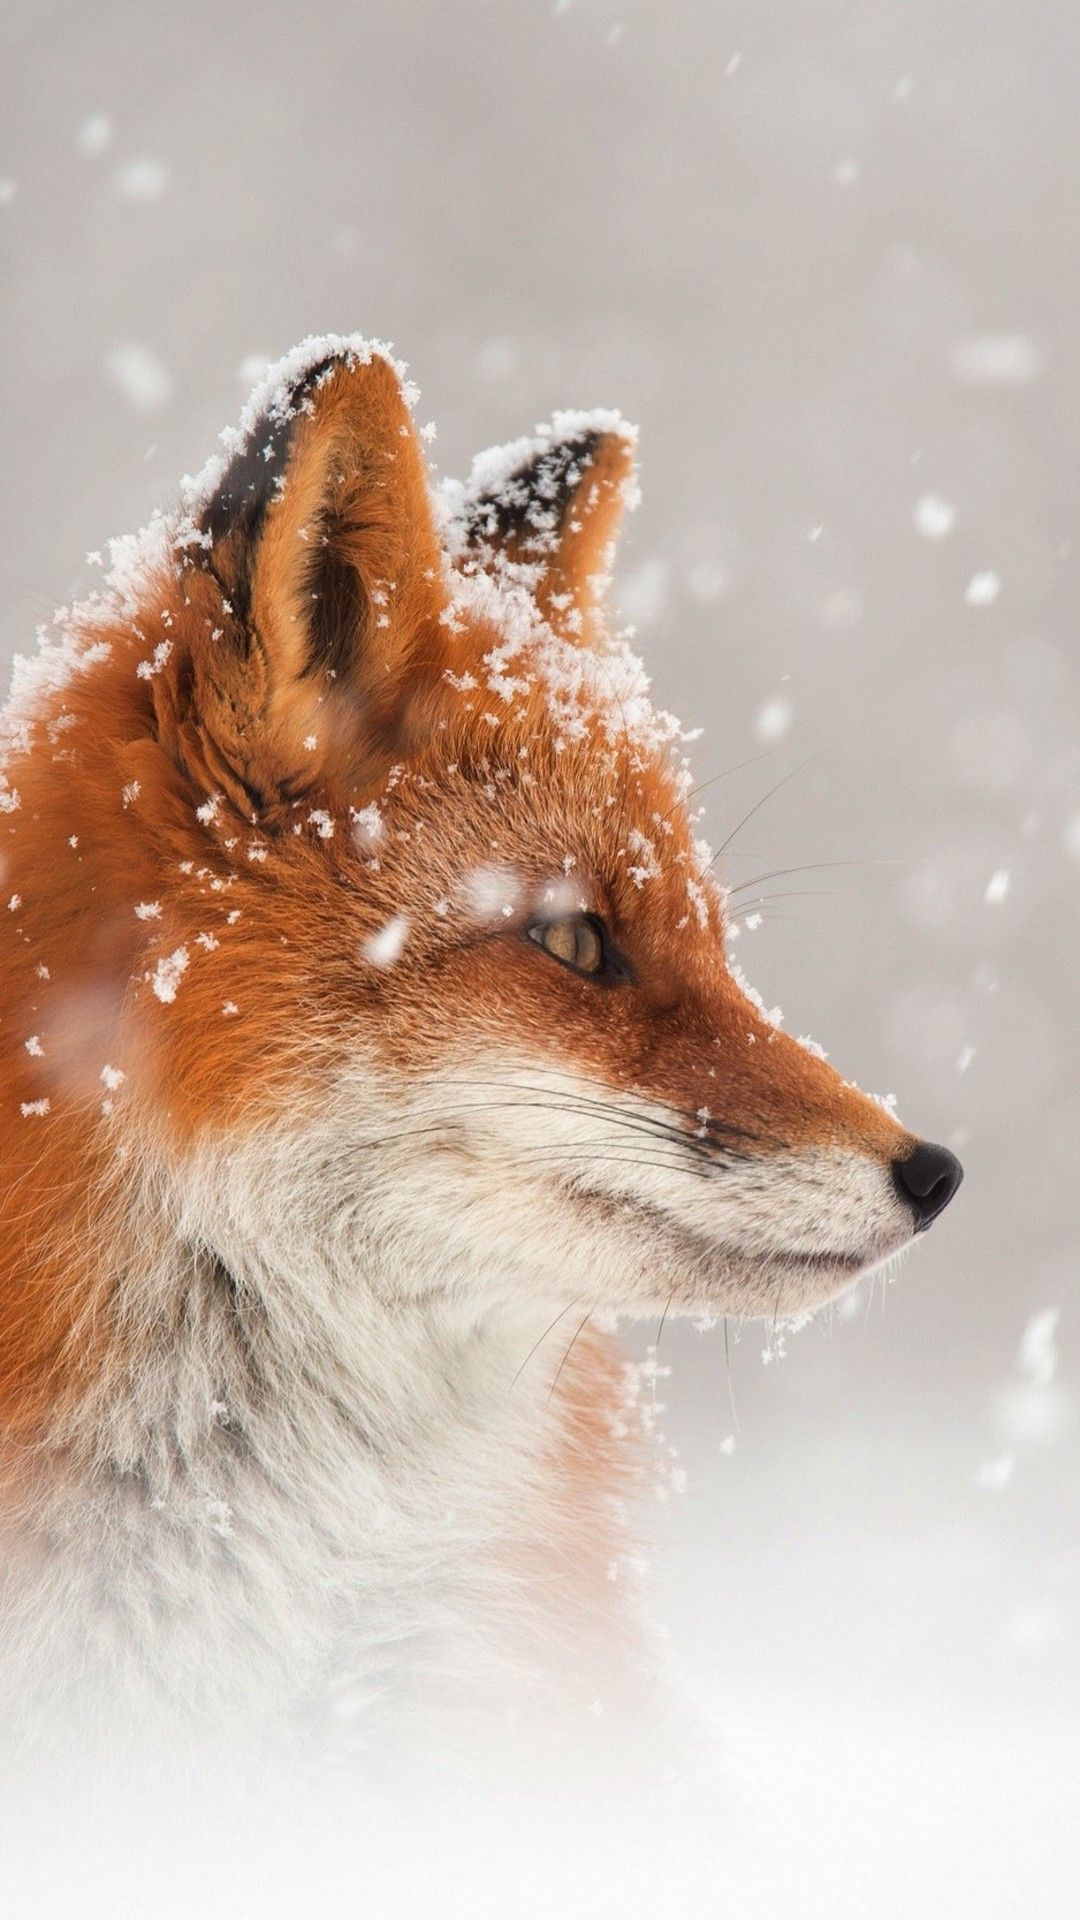 Cool Fox Wallpaper Free HD Wallpaper 563. Animals beautiful, Fox picture, Cute animal photo